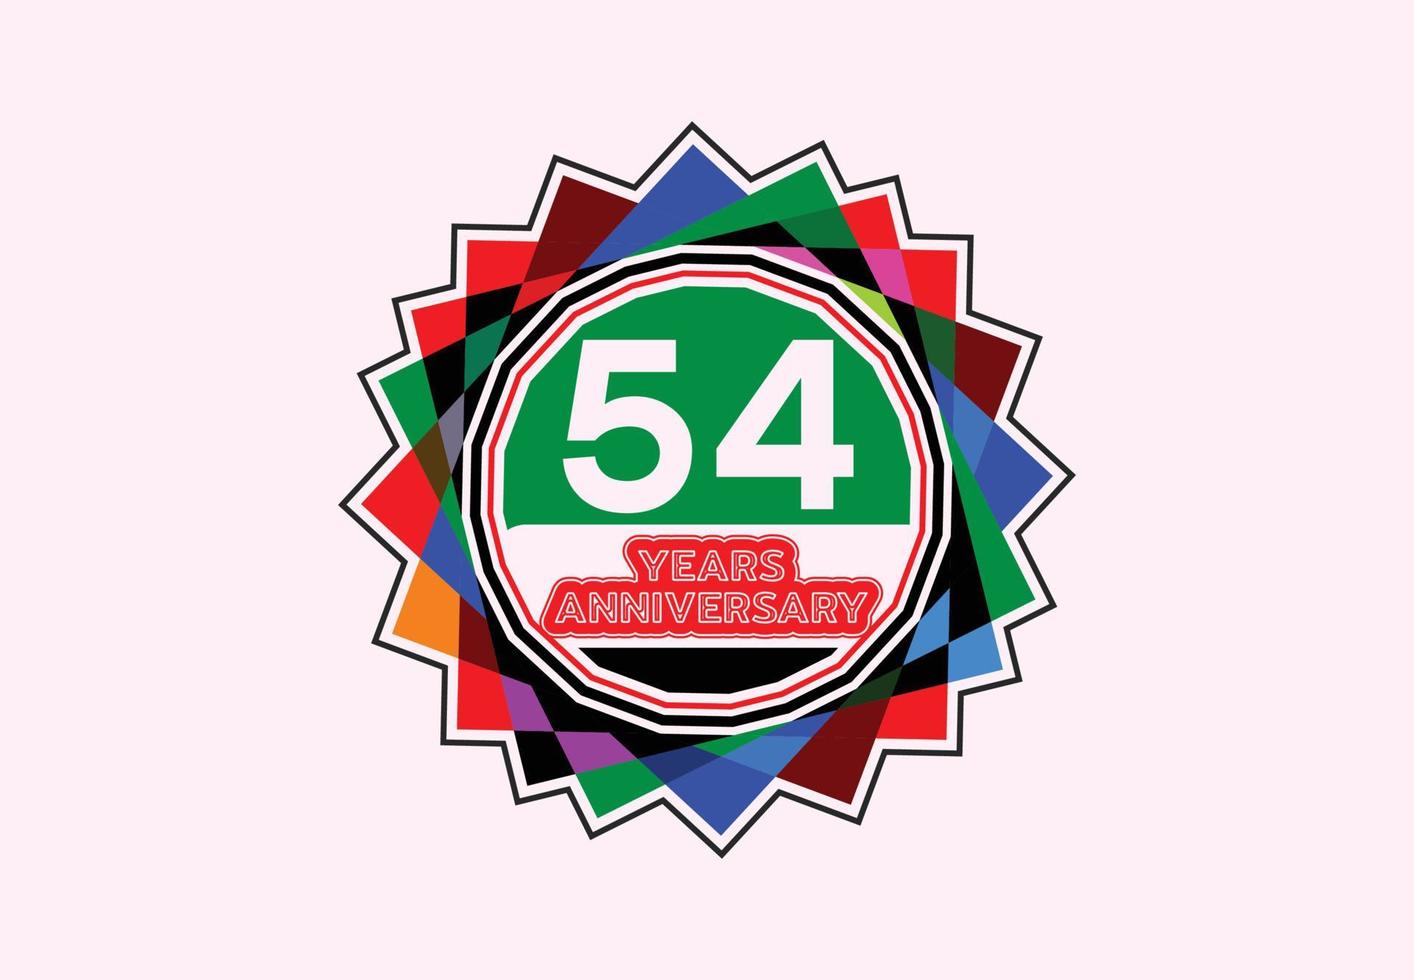 54 years anniversary logo and sticker design vector